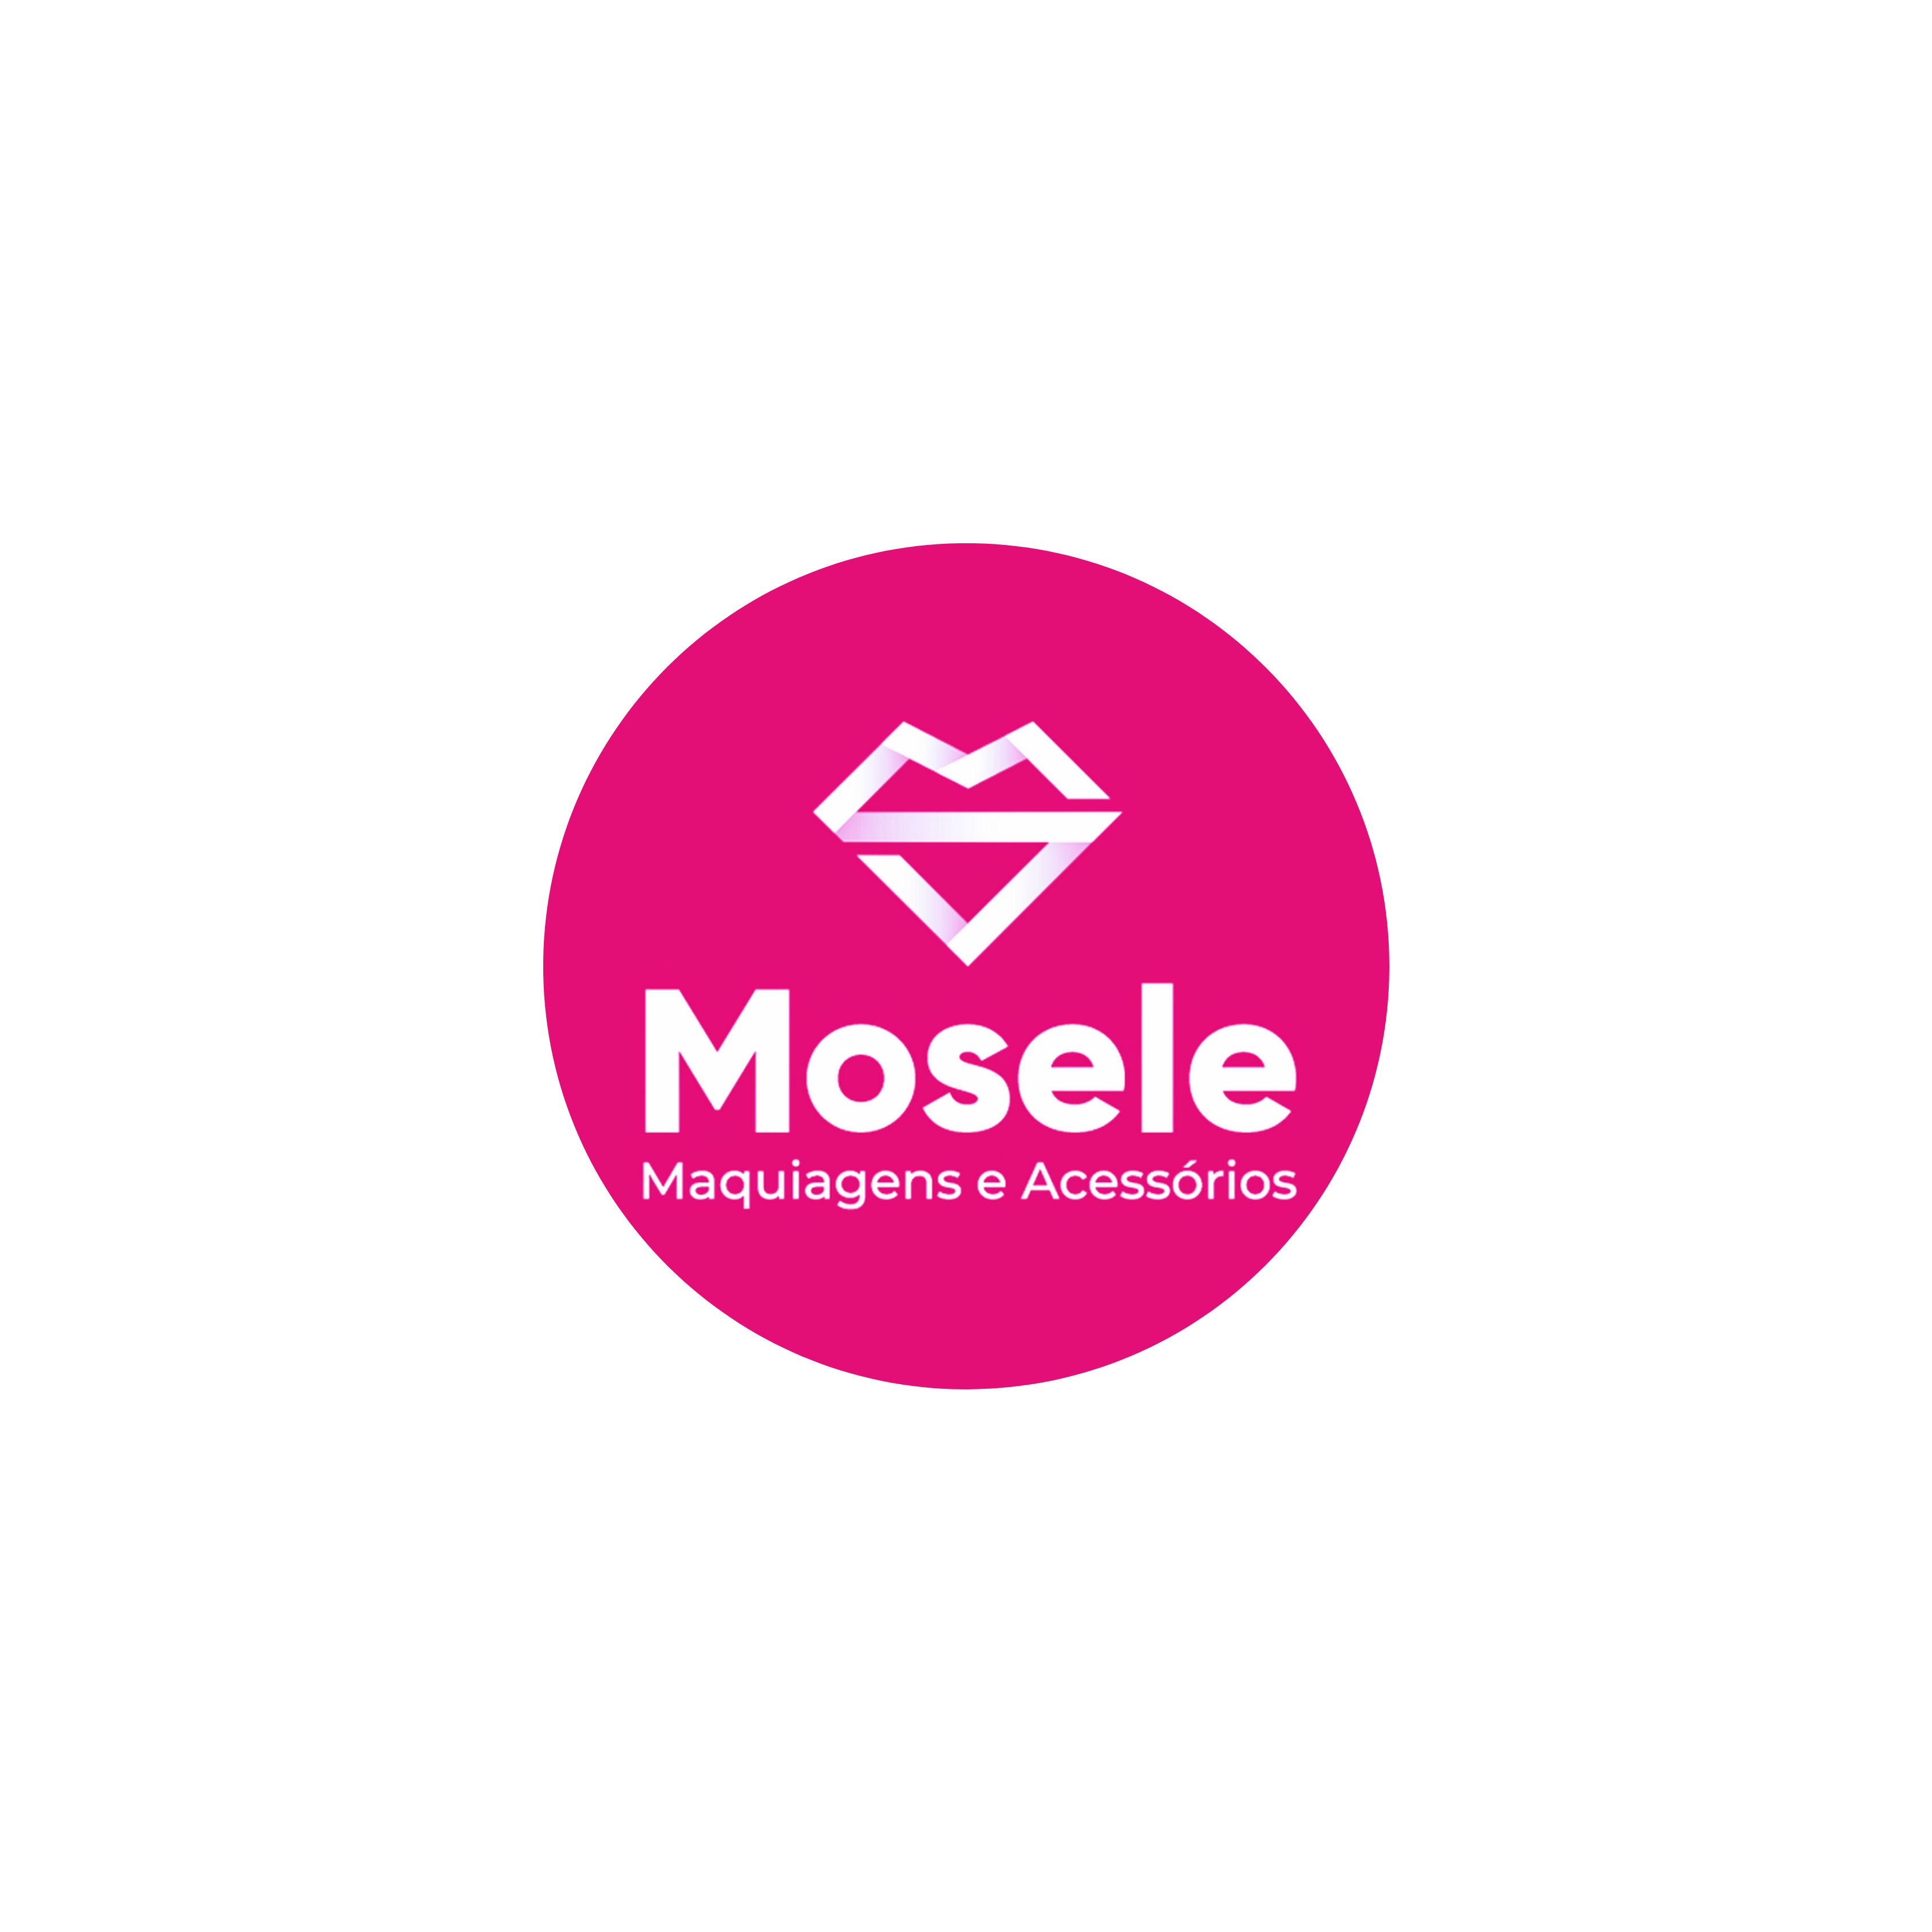 Mosele